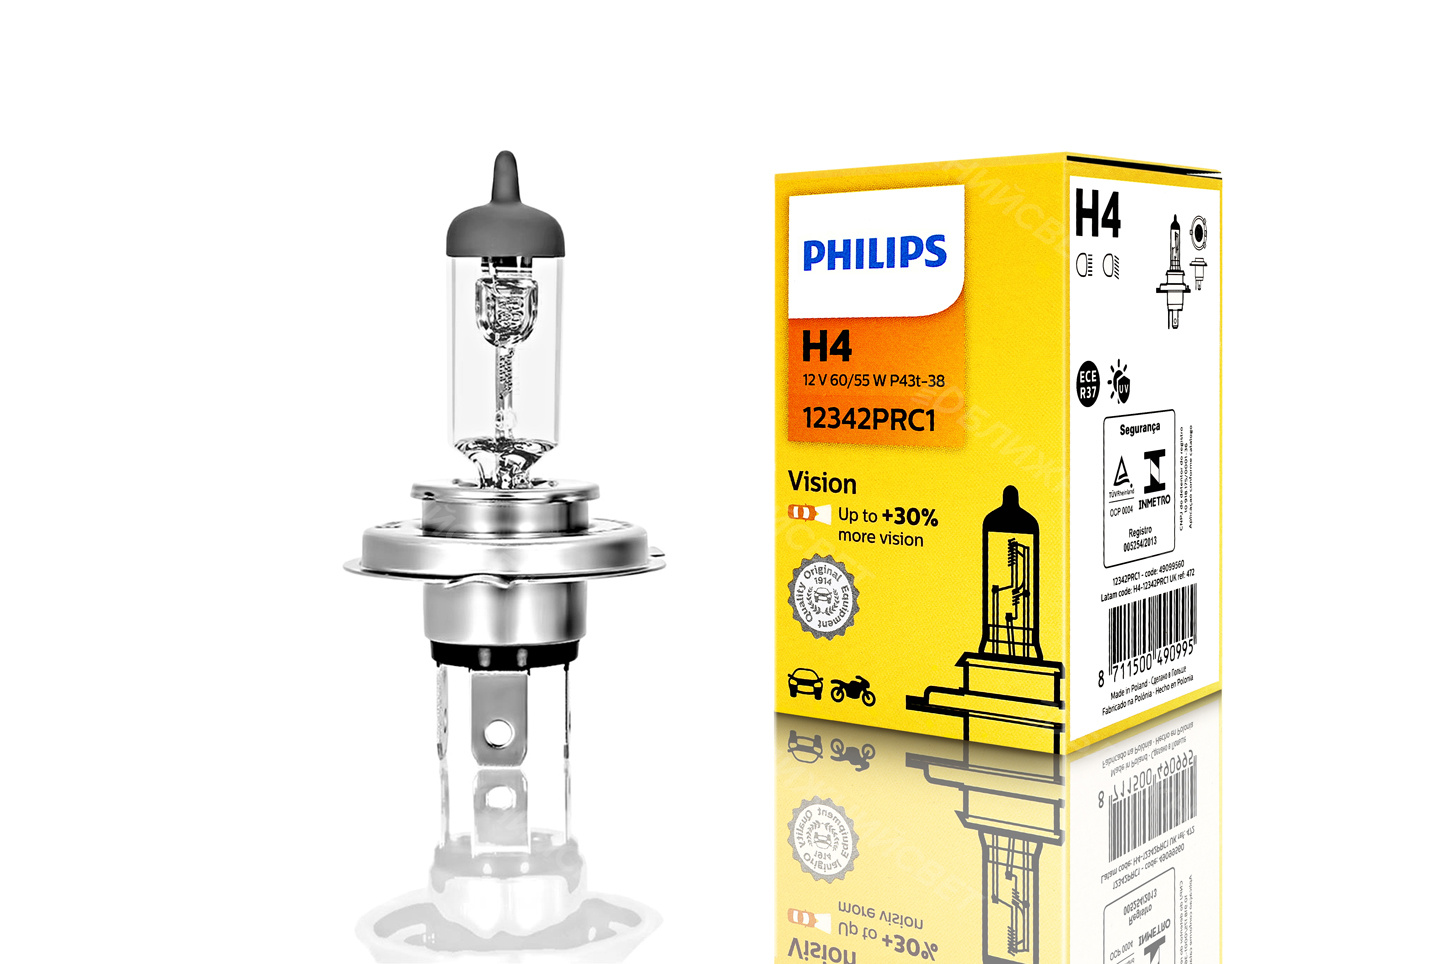 Philips 12v h4. Лампа галогенная h4 12v 60/55w +30% Philips 12342prc1. Автолампа н4 12v 60/55w *30% света 12342pr, Philips. Philips h4 12342prc1. Авто лампа Philips н4 12v 60/55w Vision Premium +30.